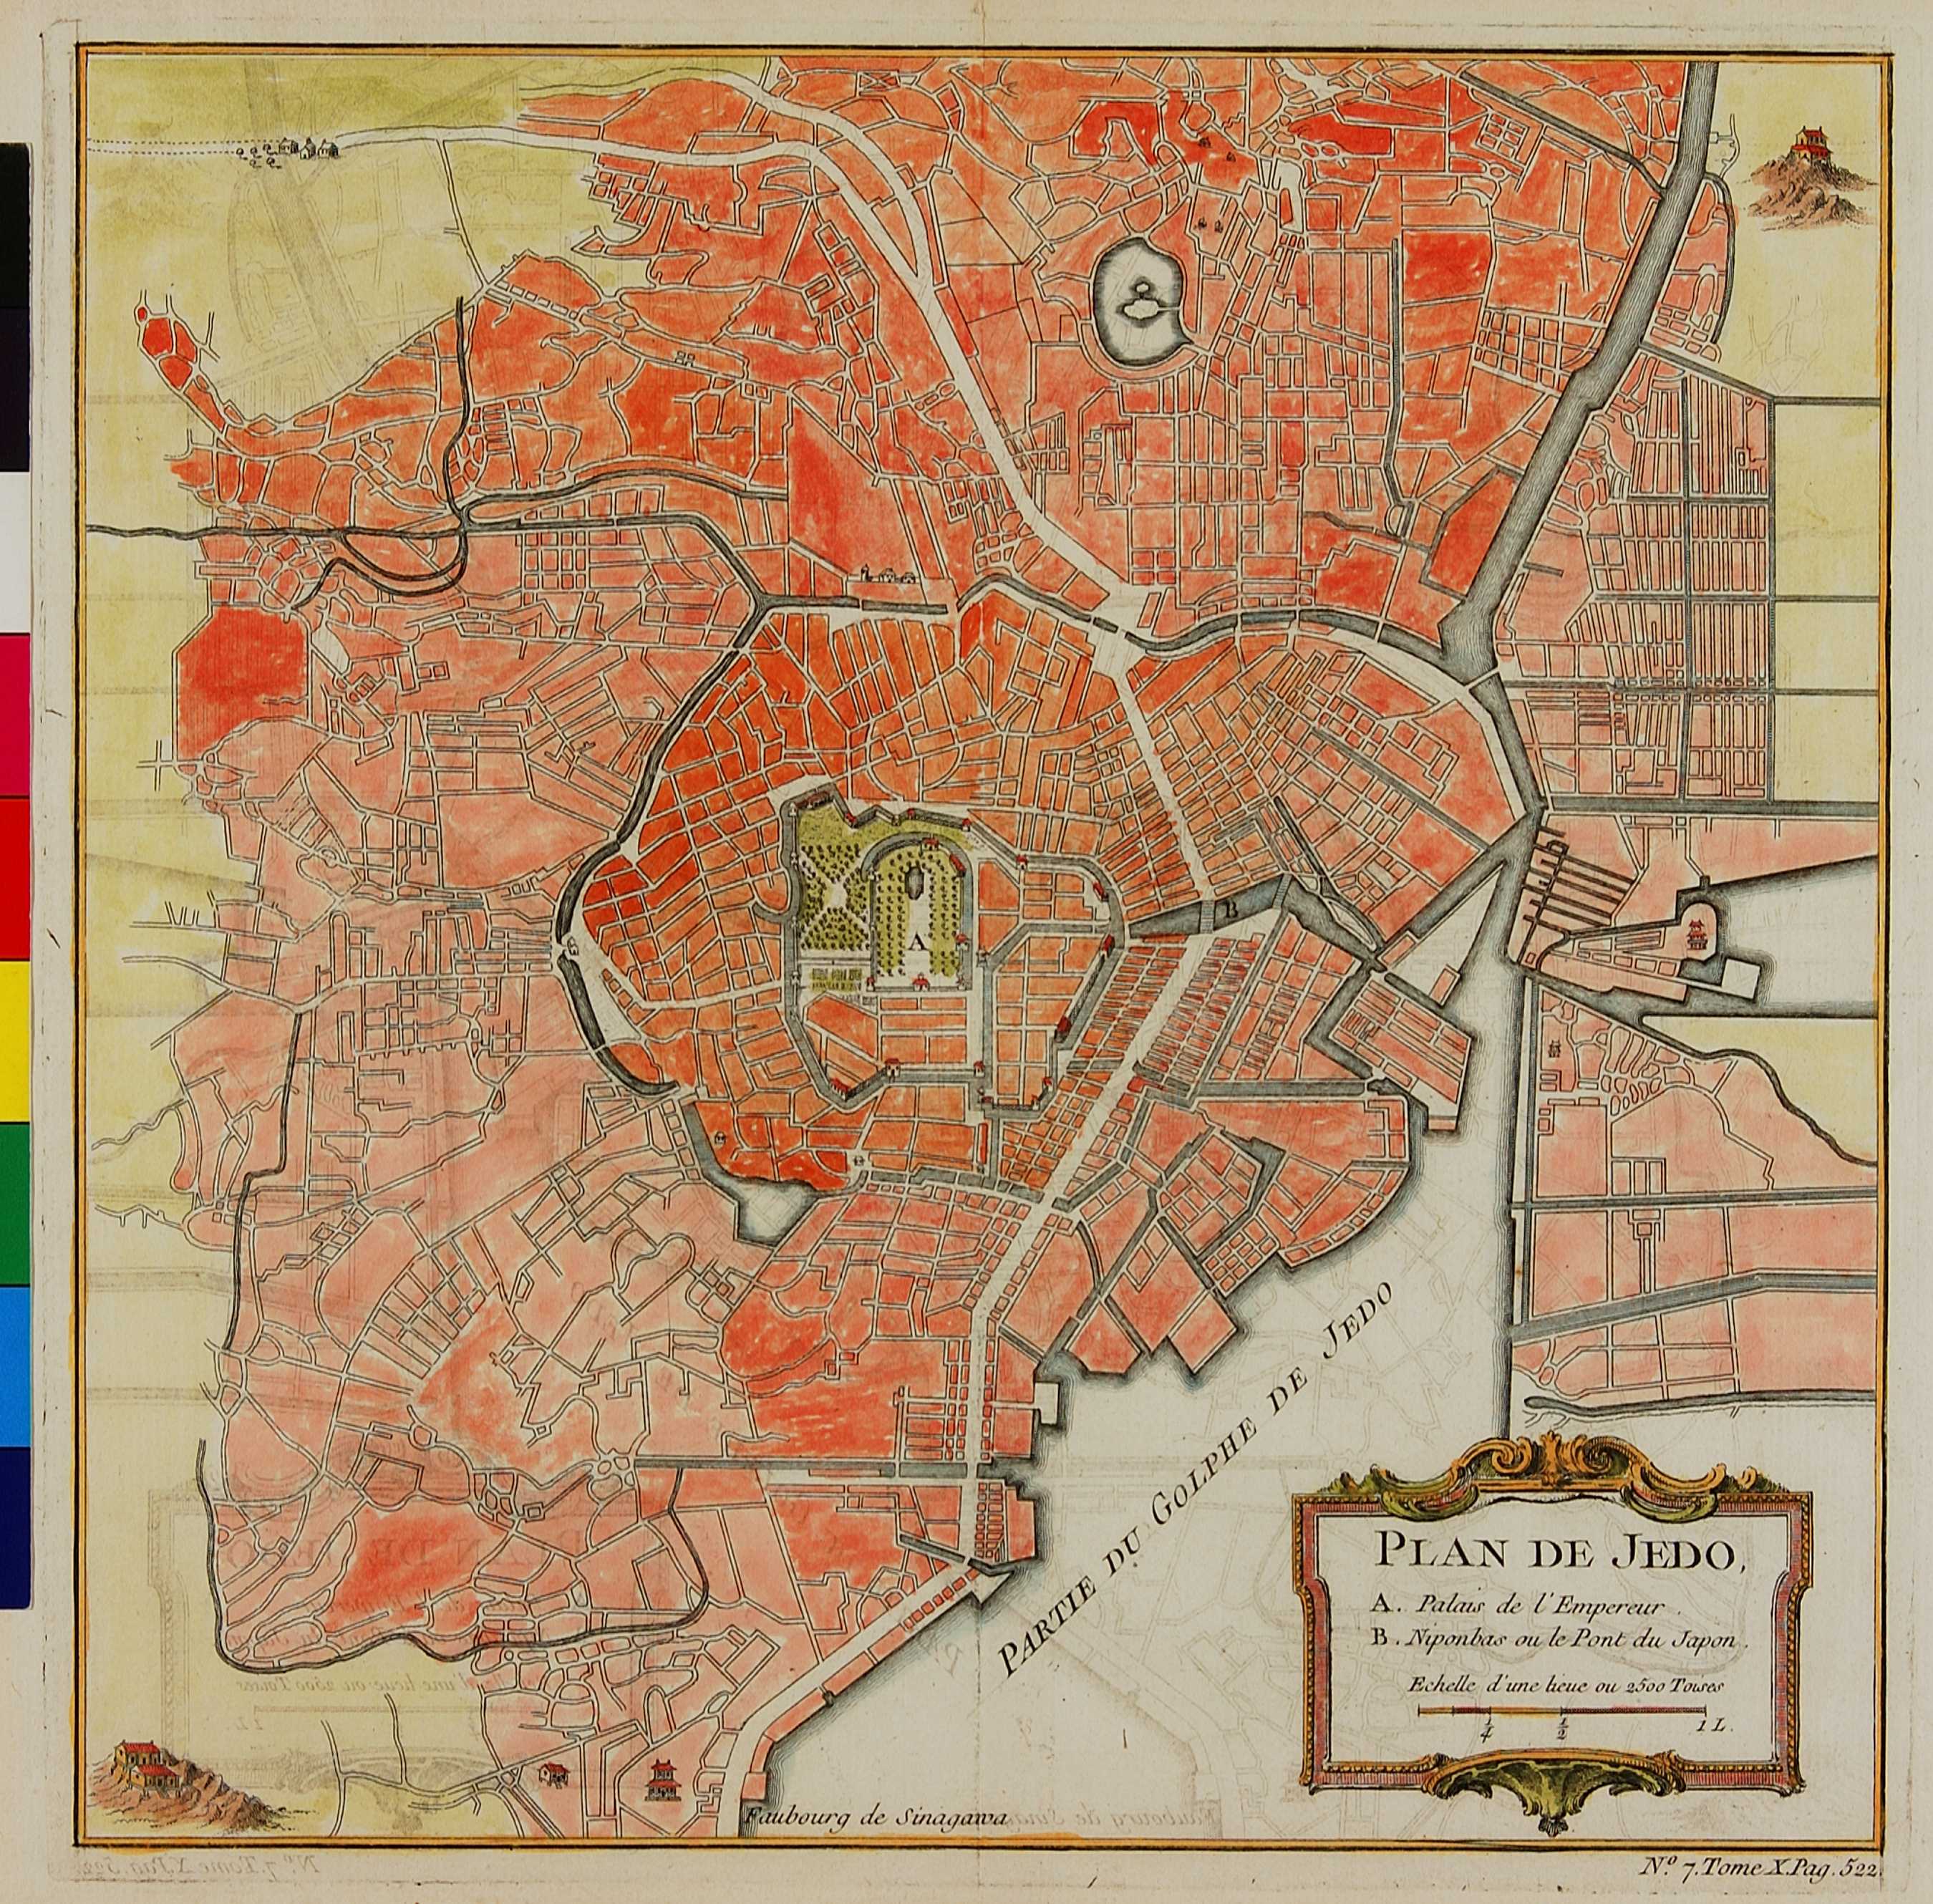 02.01 Plan de Jedo (Map of Edo)